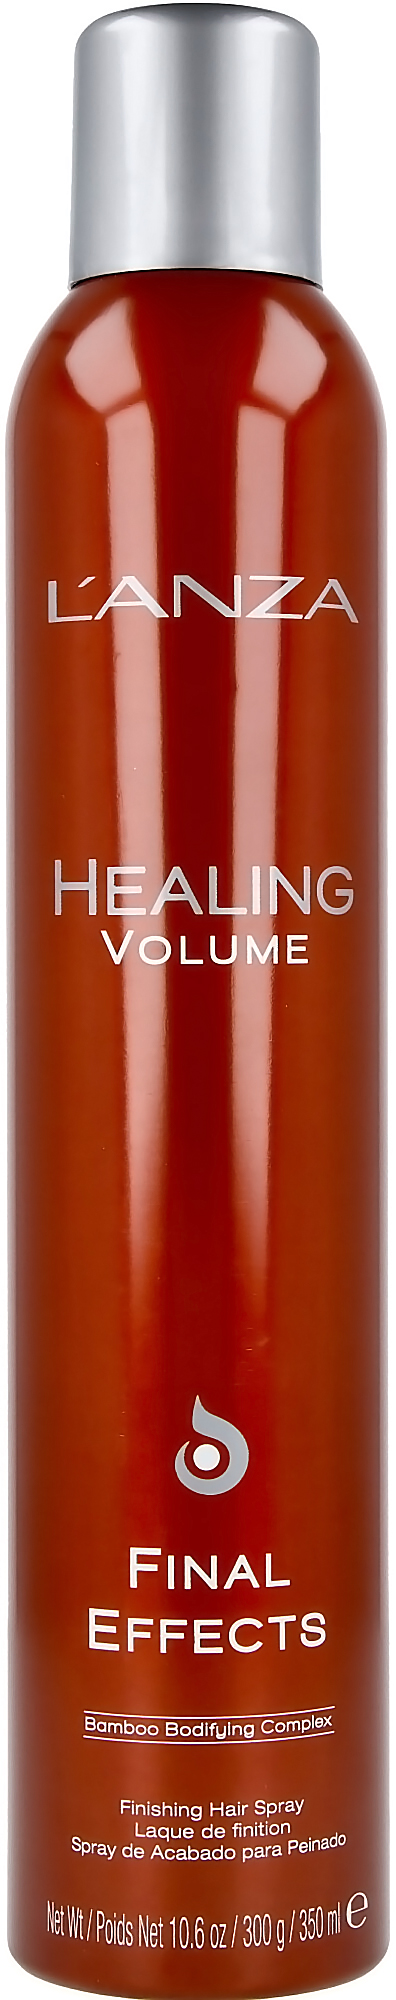 Lanza Healing Volume Final Effects Spray